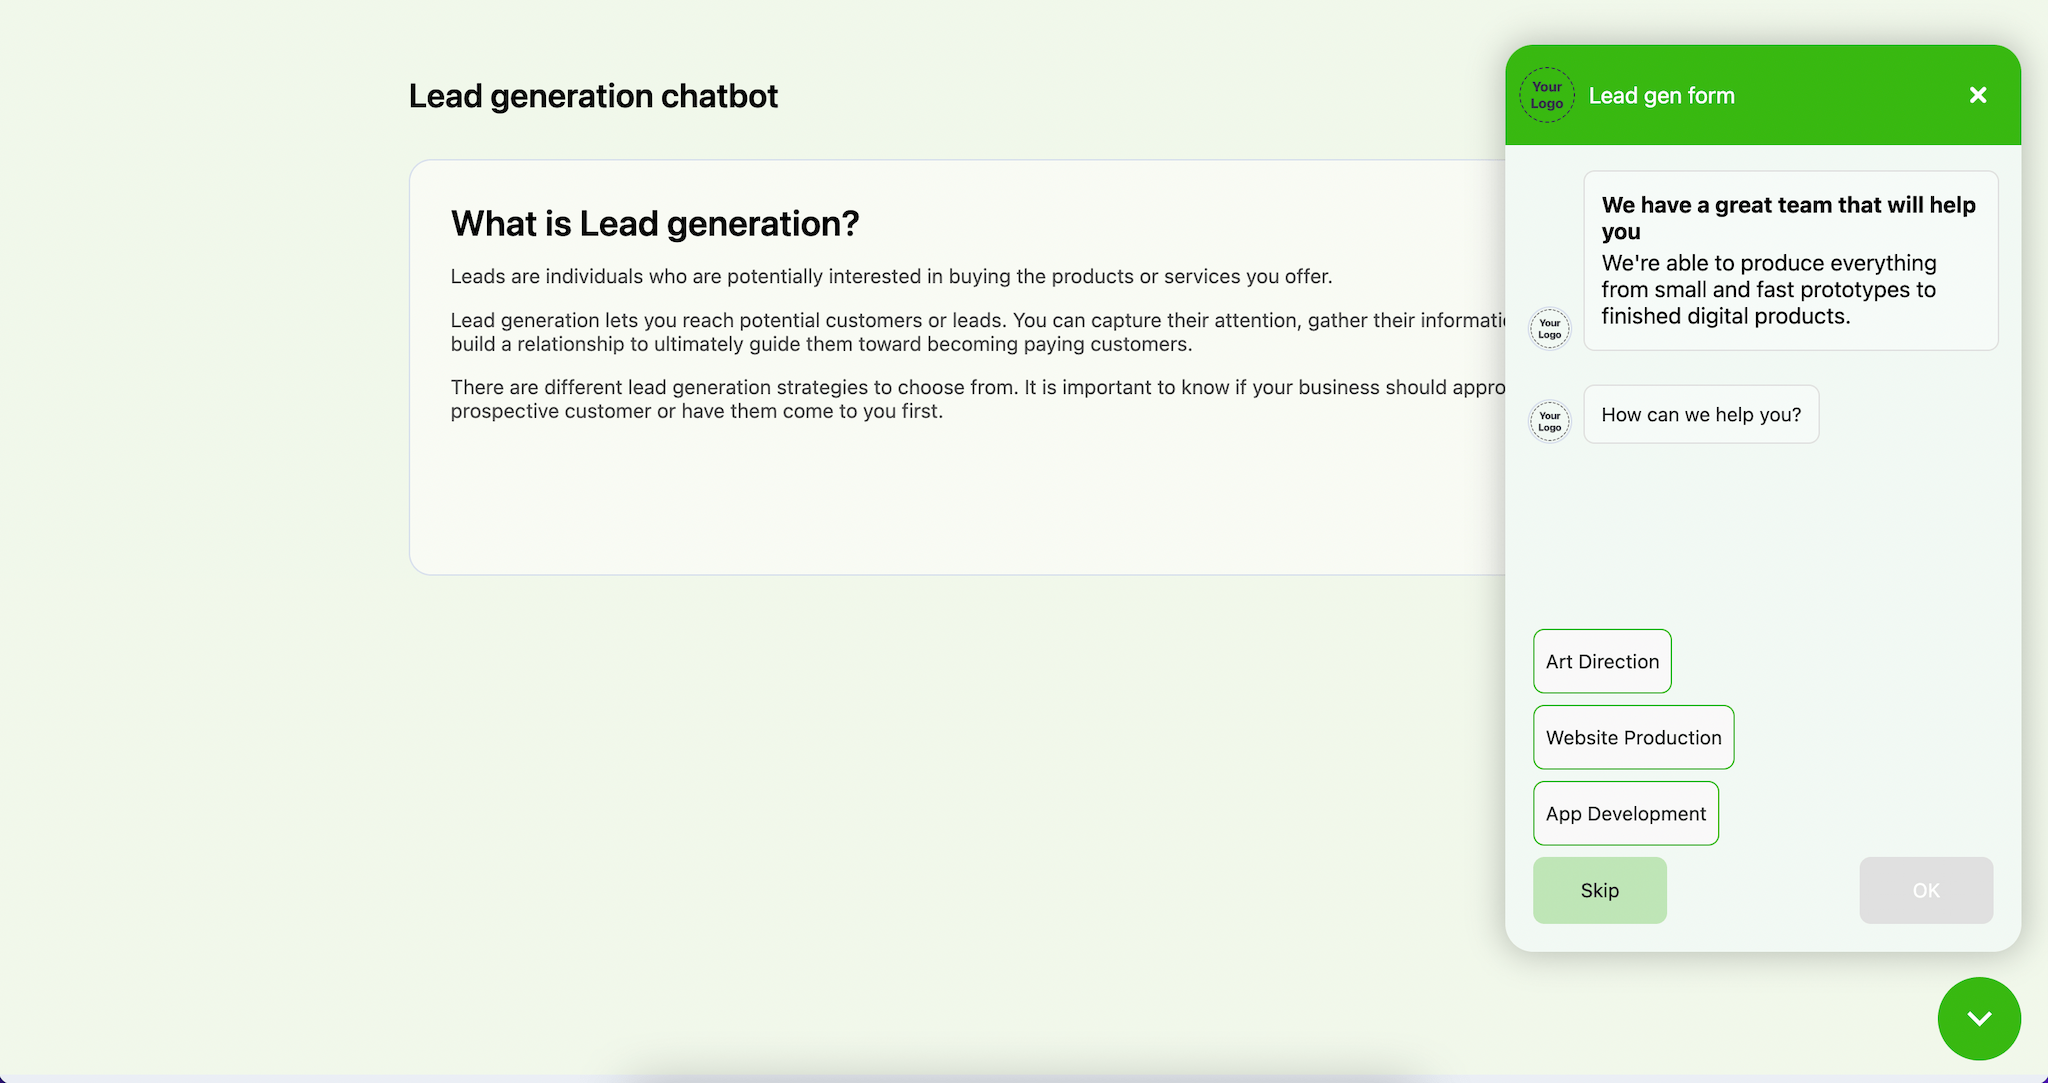 Lead generation chatbot